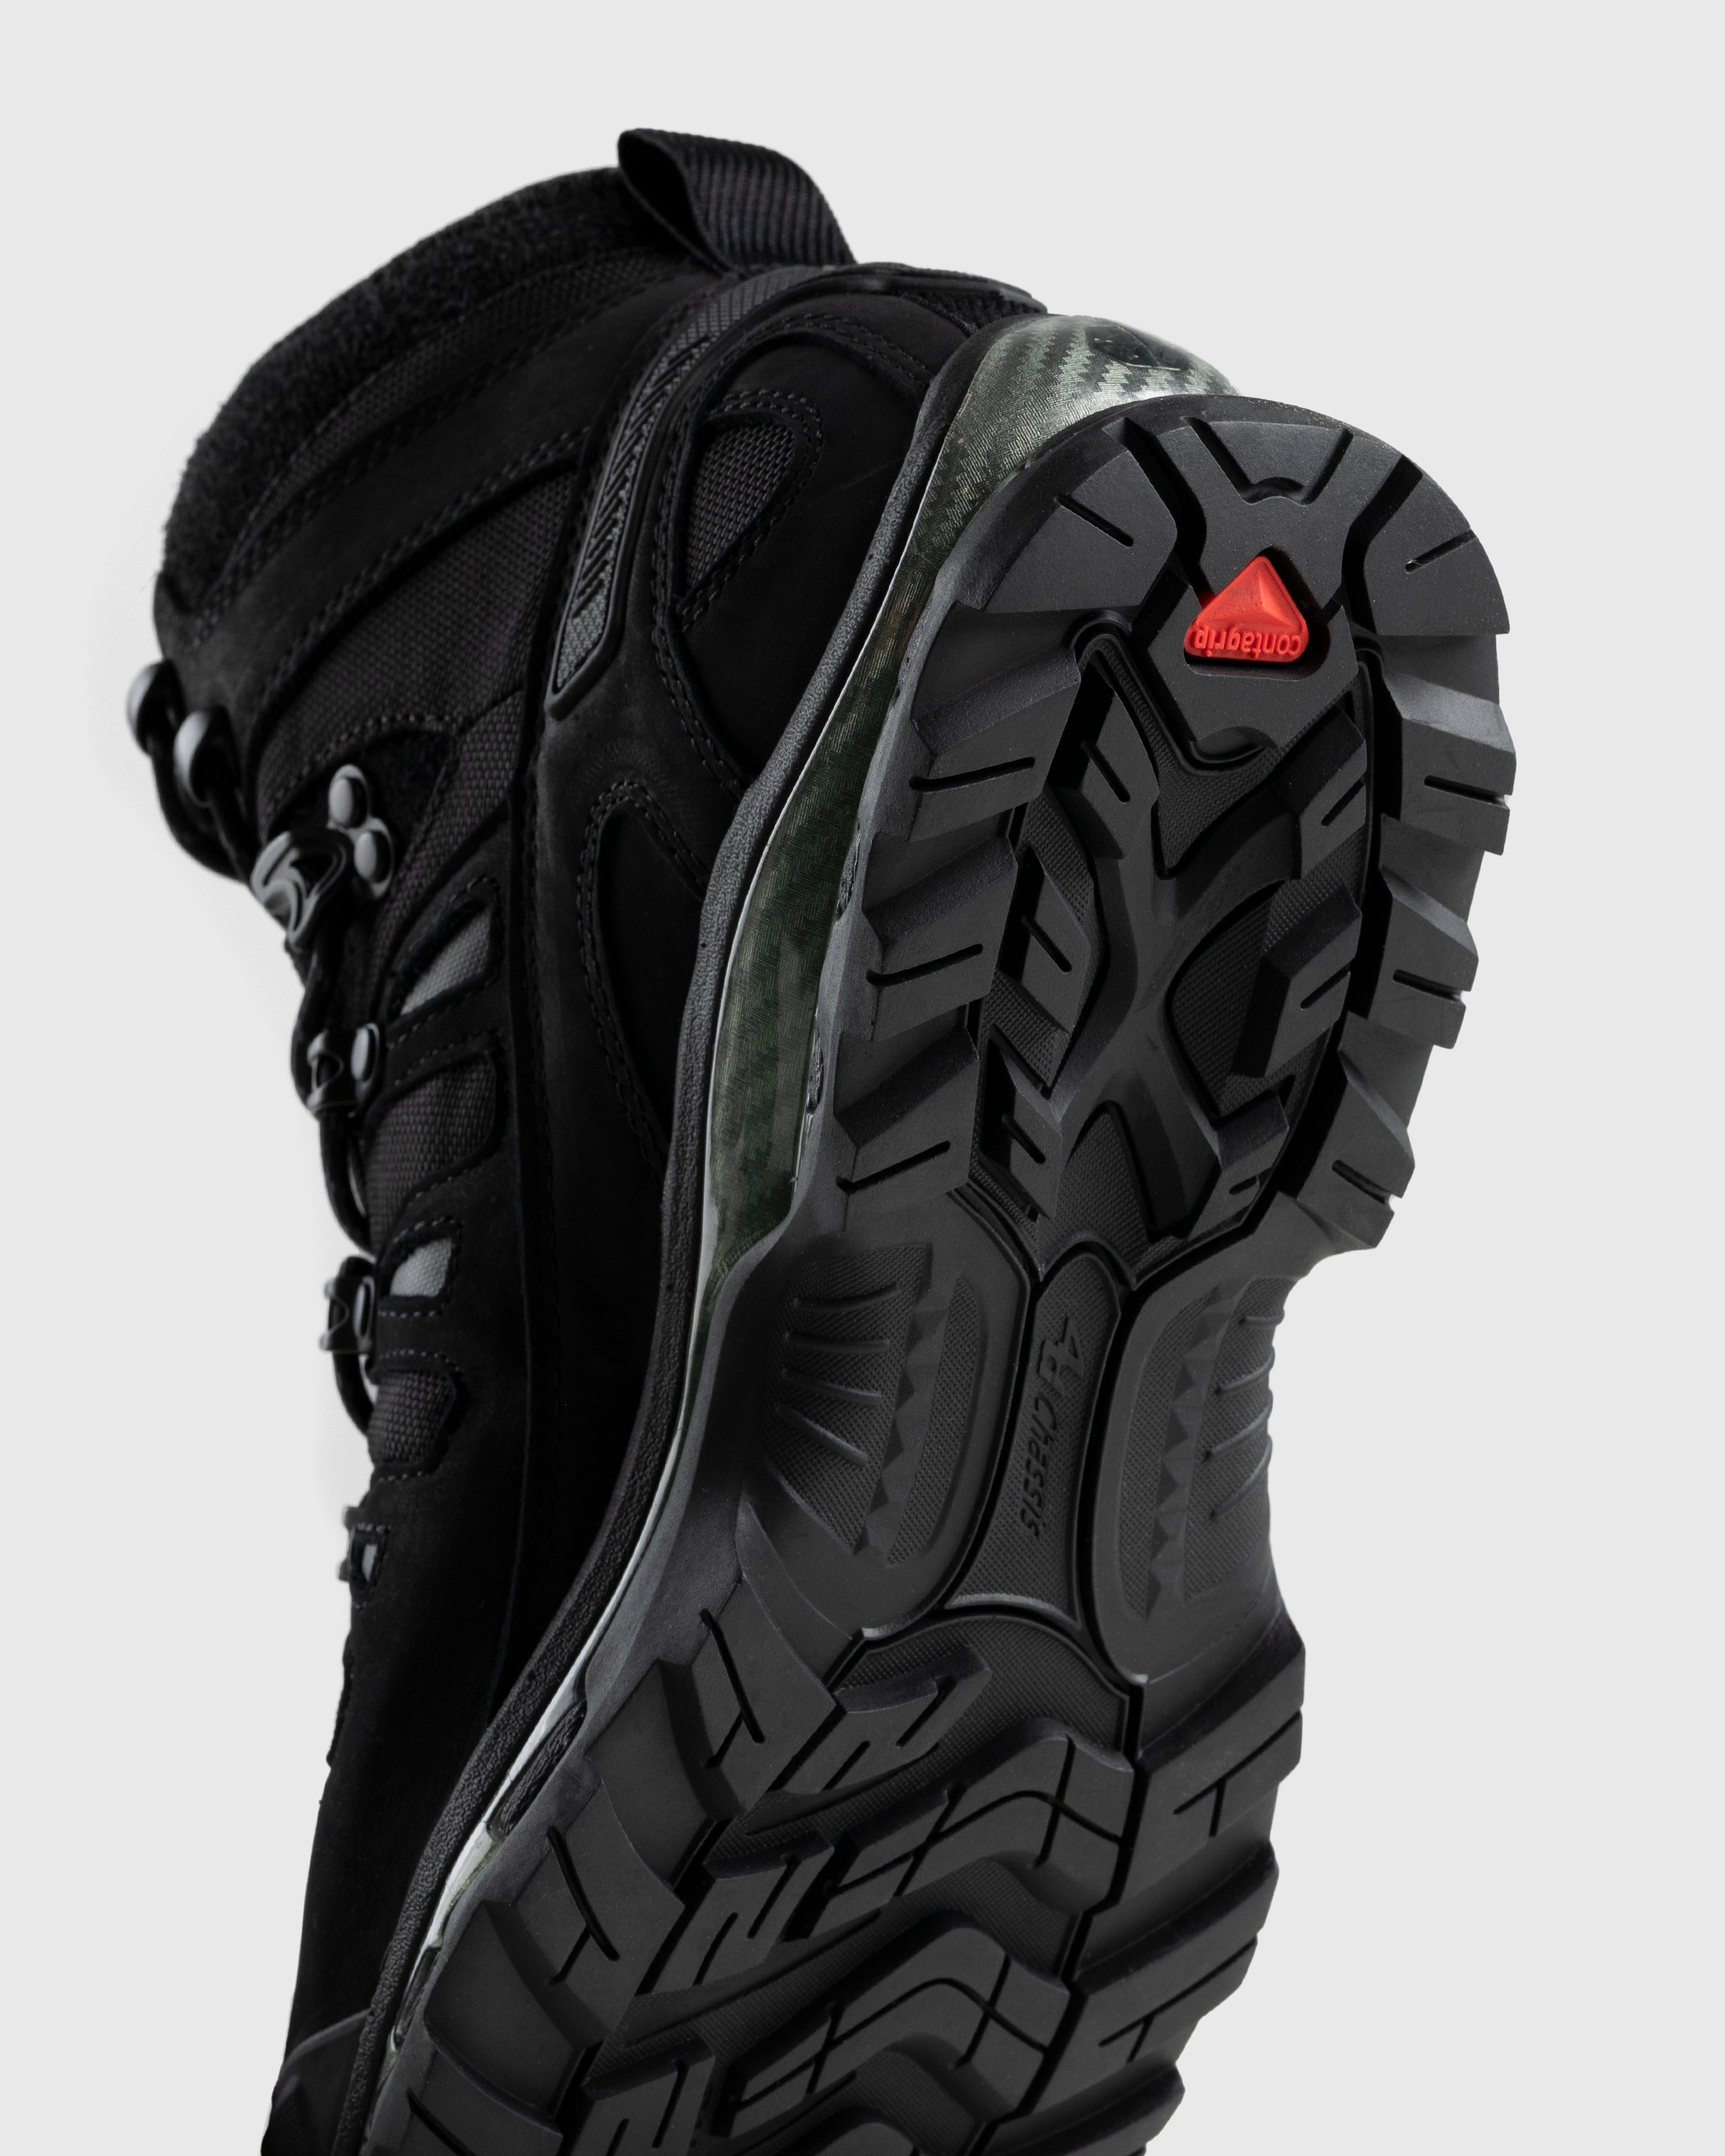 Salomon - Quest 4D GTX Advanced Black - Footwear - Black - Image 6